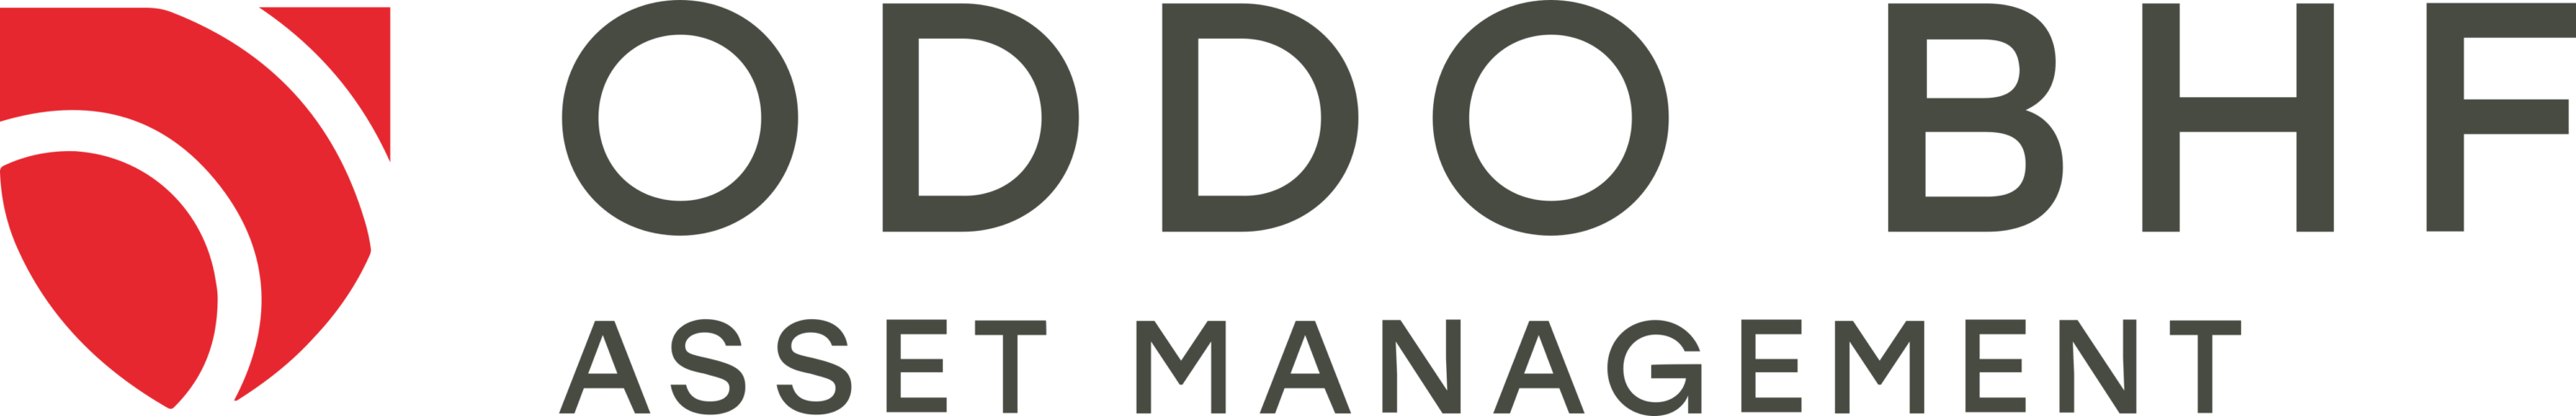 Oddo BHF Asset Management Logo